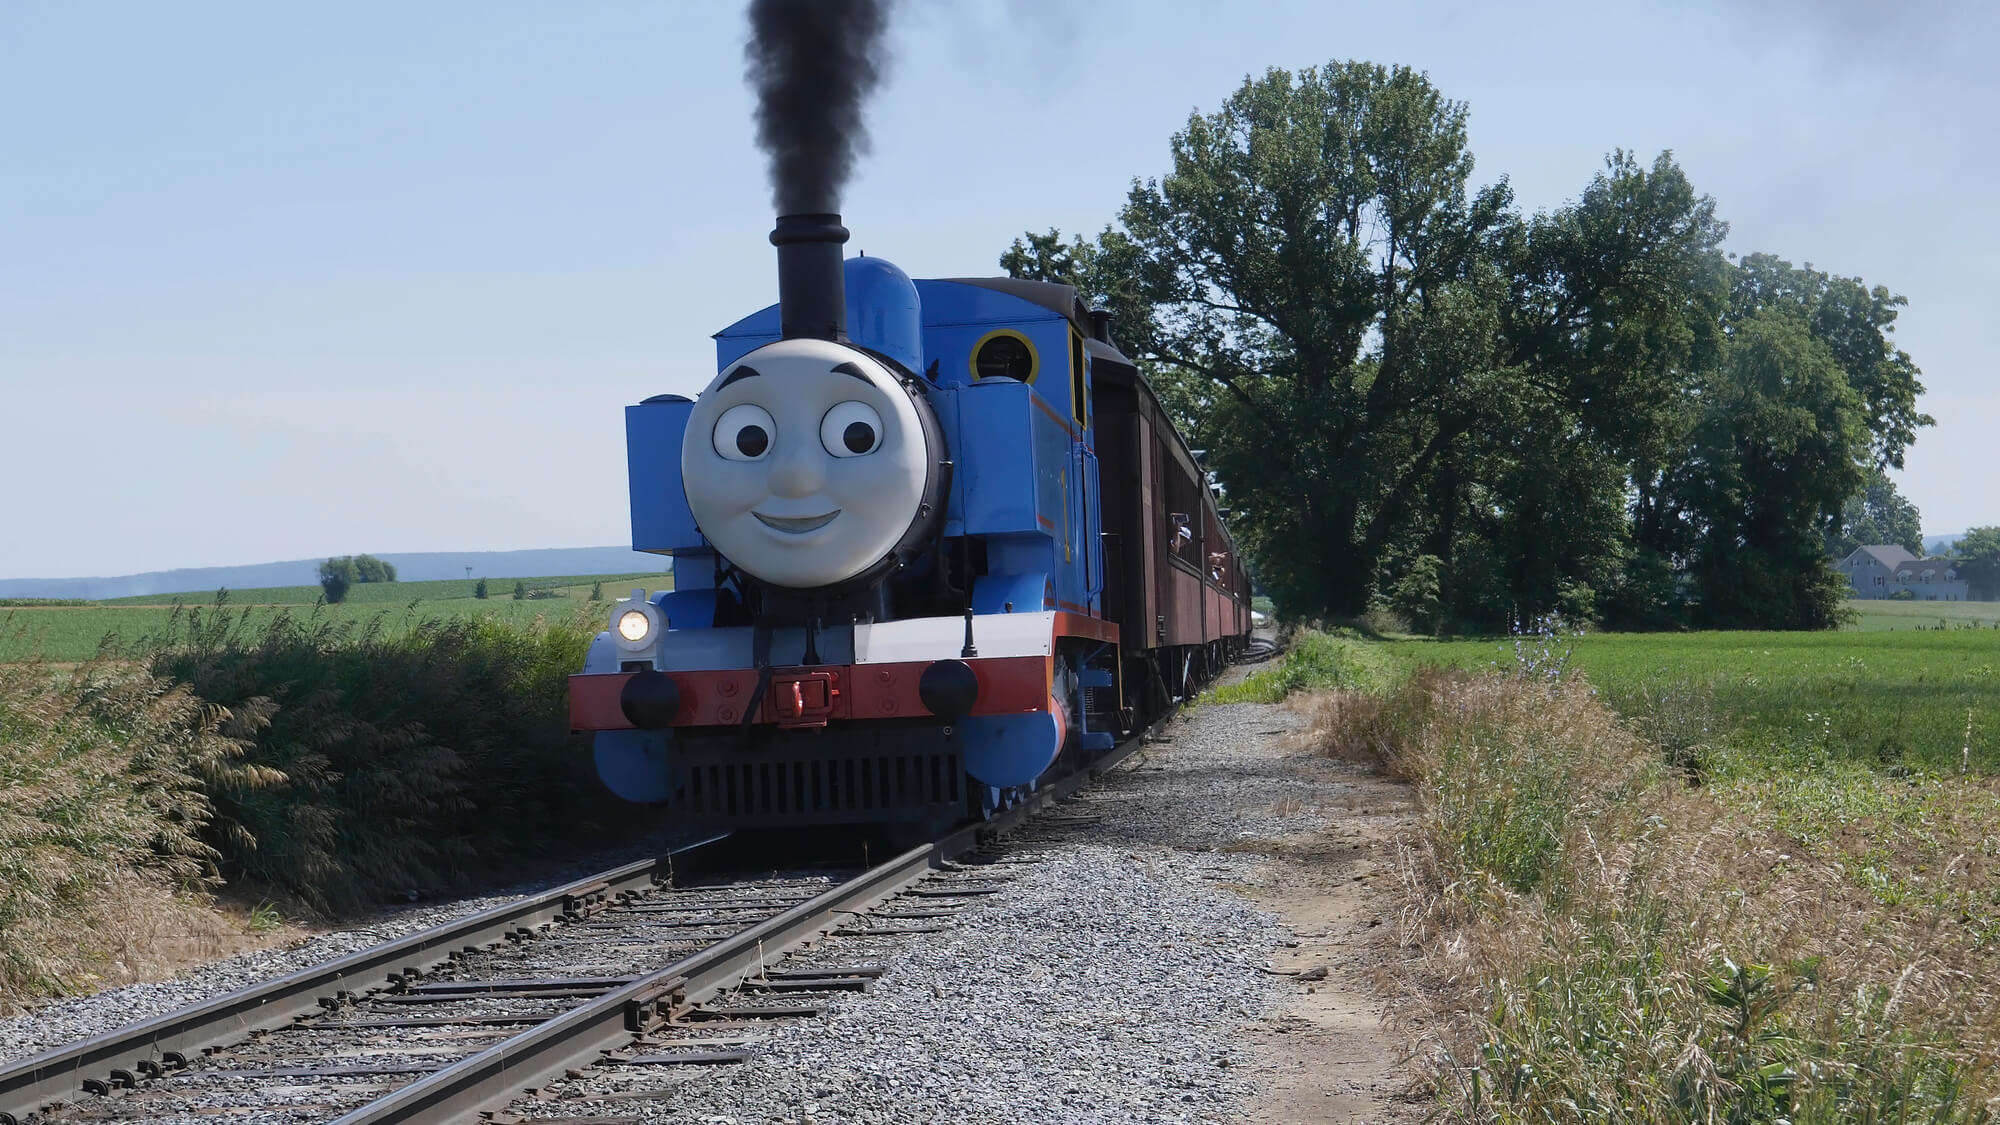 Thomas the Locomotive - A version of the locomotive operating in Pennsylvania. Image: depositphotos.com